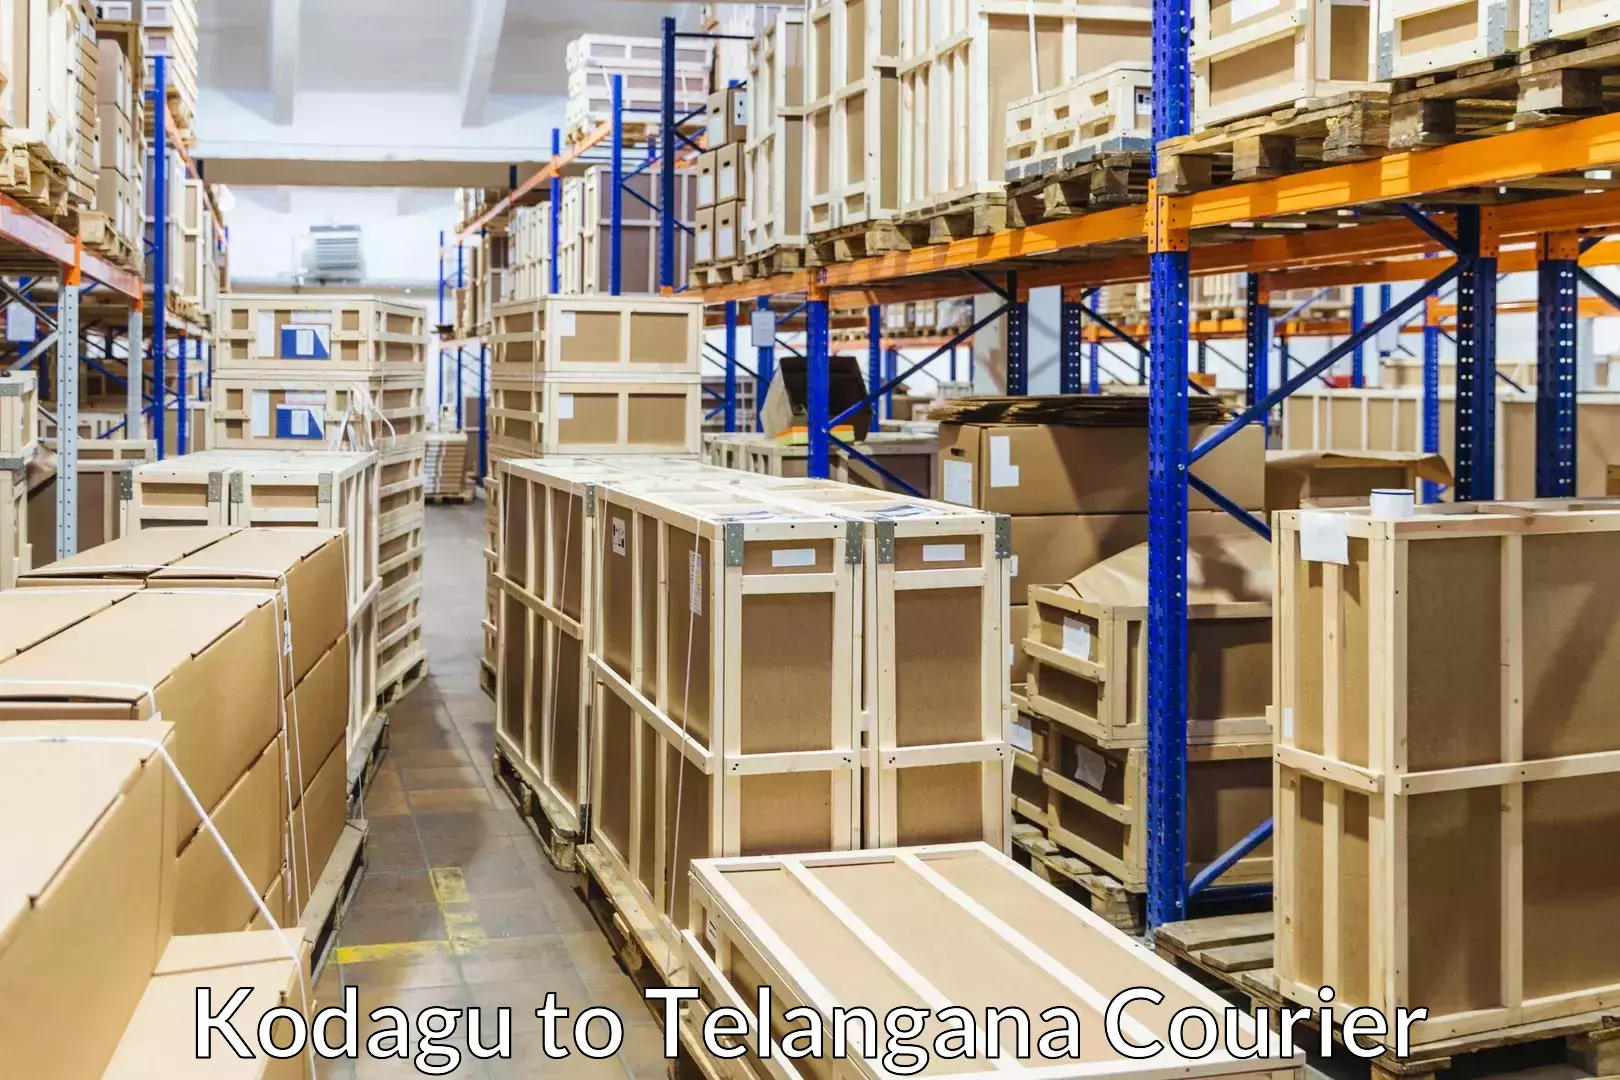 Professional furniture movers Kodagu to Secunderabad